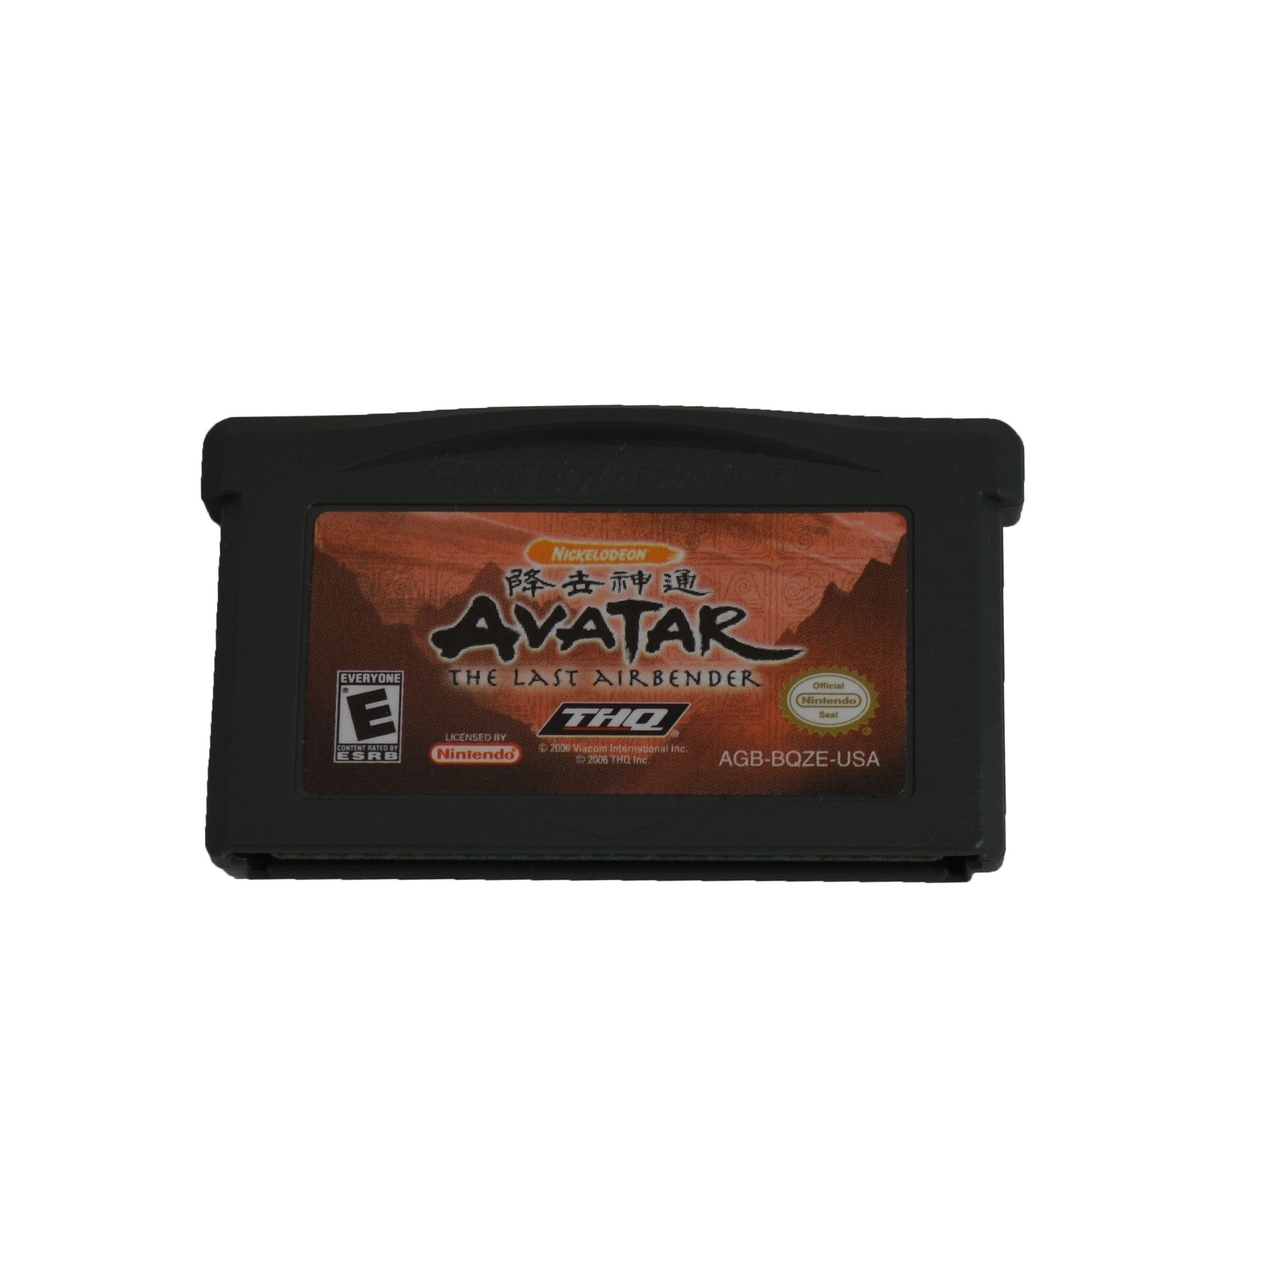 Avatar The Last Airbender - Gameboy Advance Games